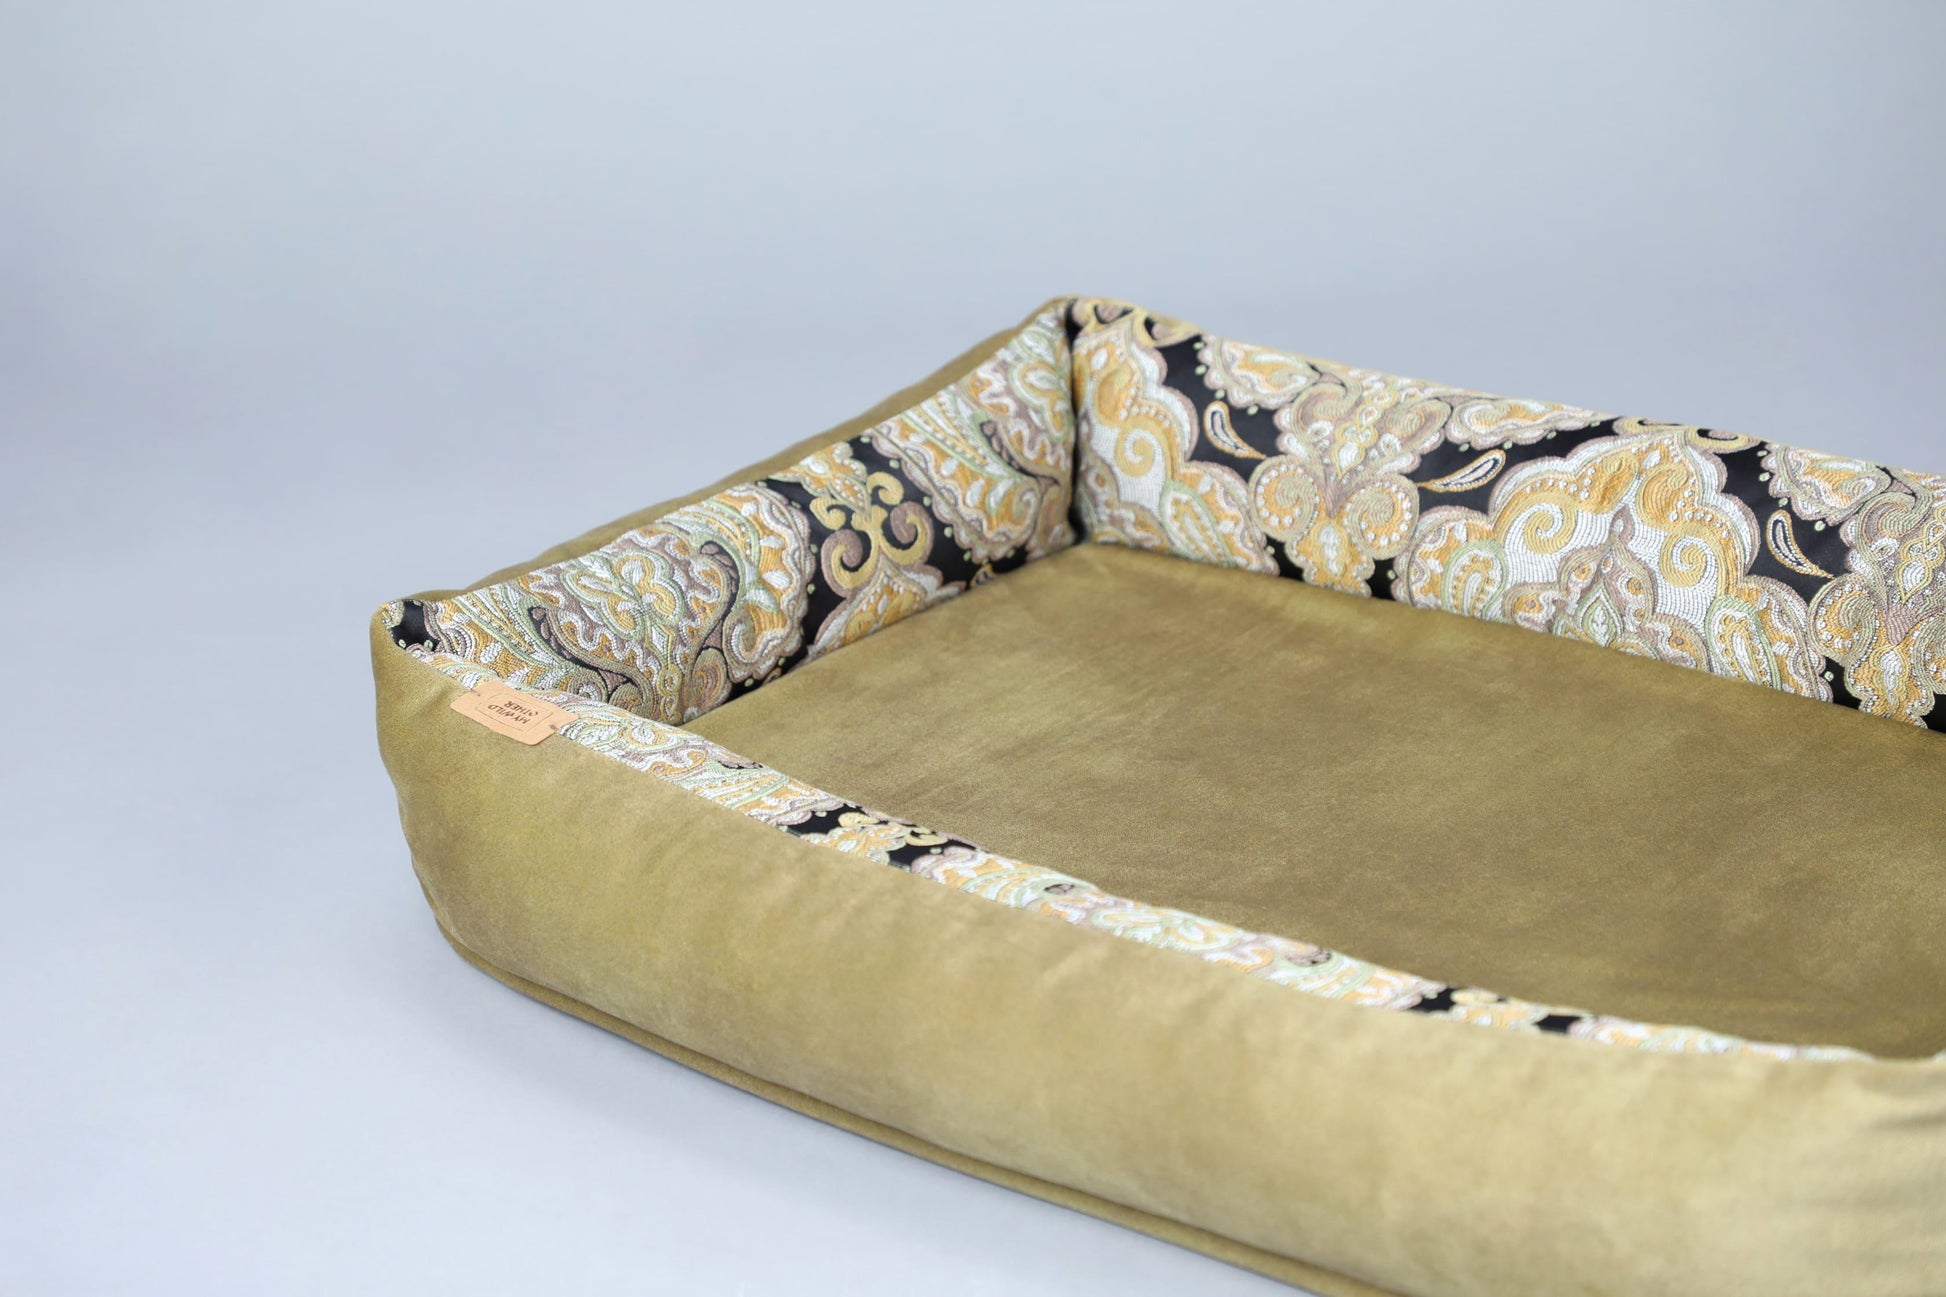 2-sided bohemian style dog bed. DARK KHAKI - premium dog goods handmade in Europe by animalistus